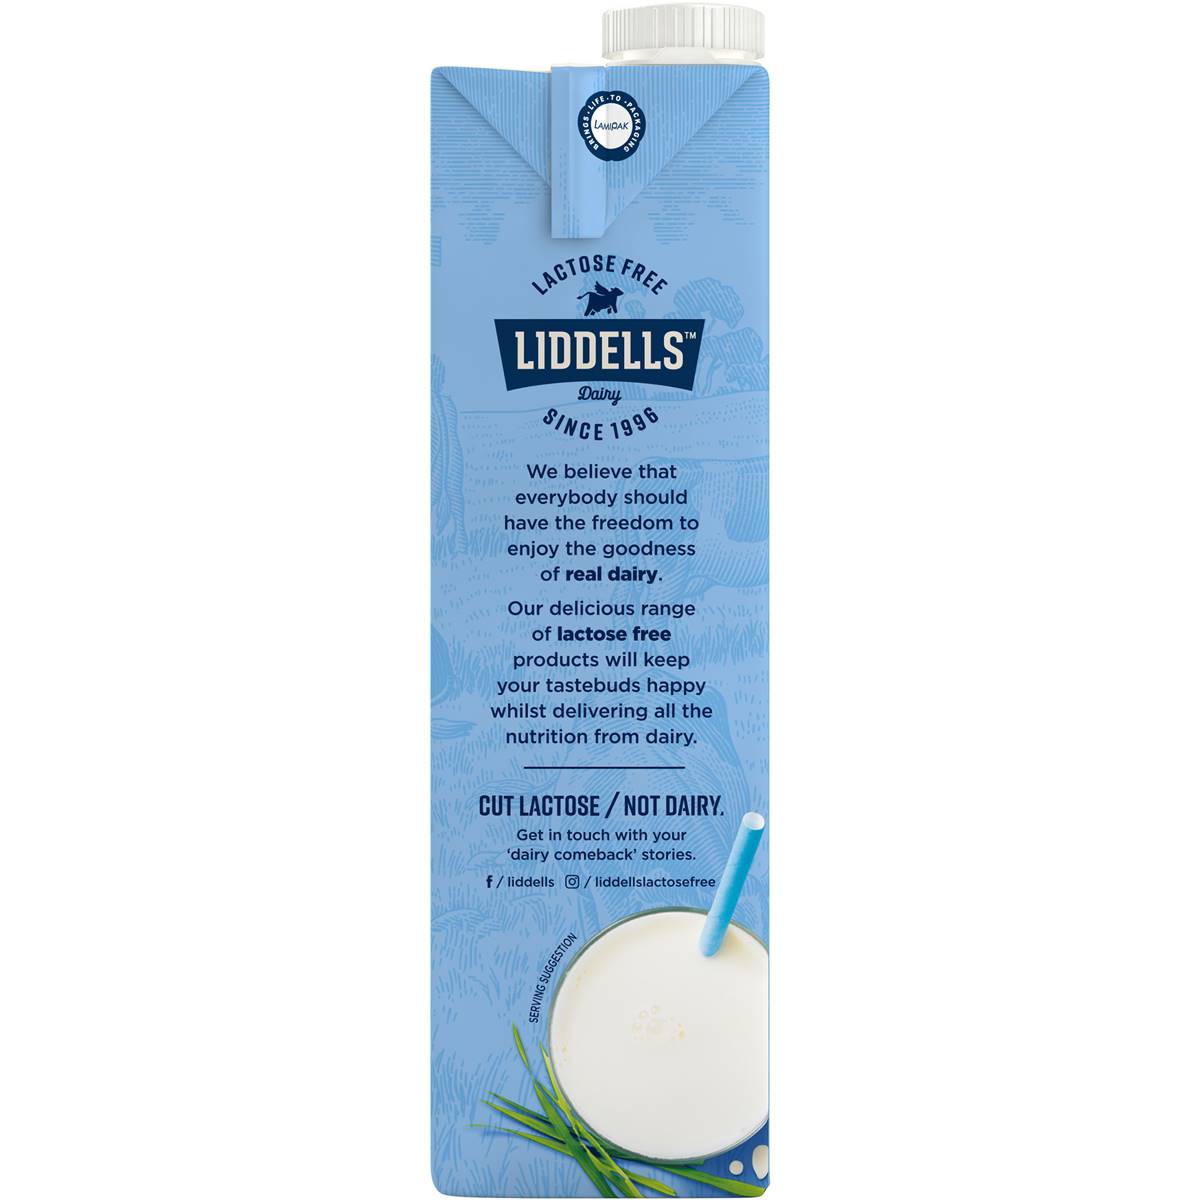 LIDDELLS Full Cream Milk, Easy to digest, 1L - Gluten Free, Lactose Free